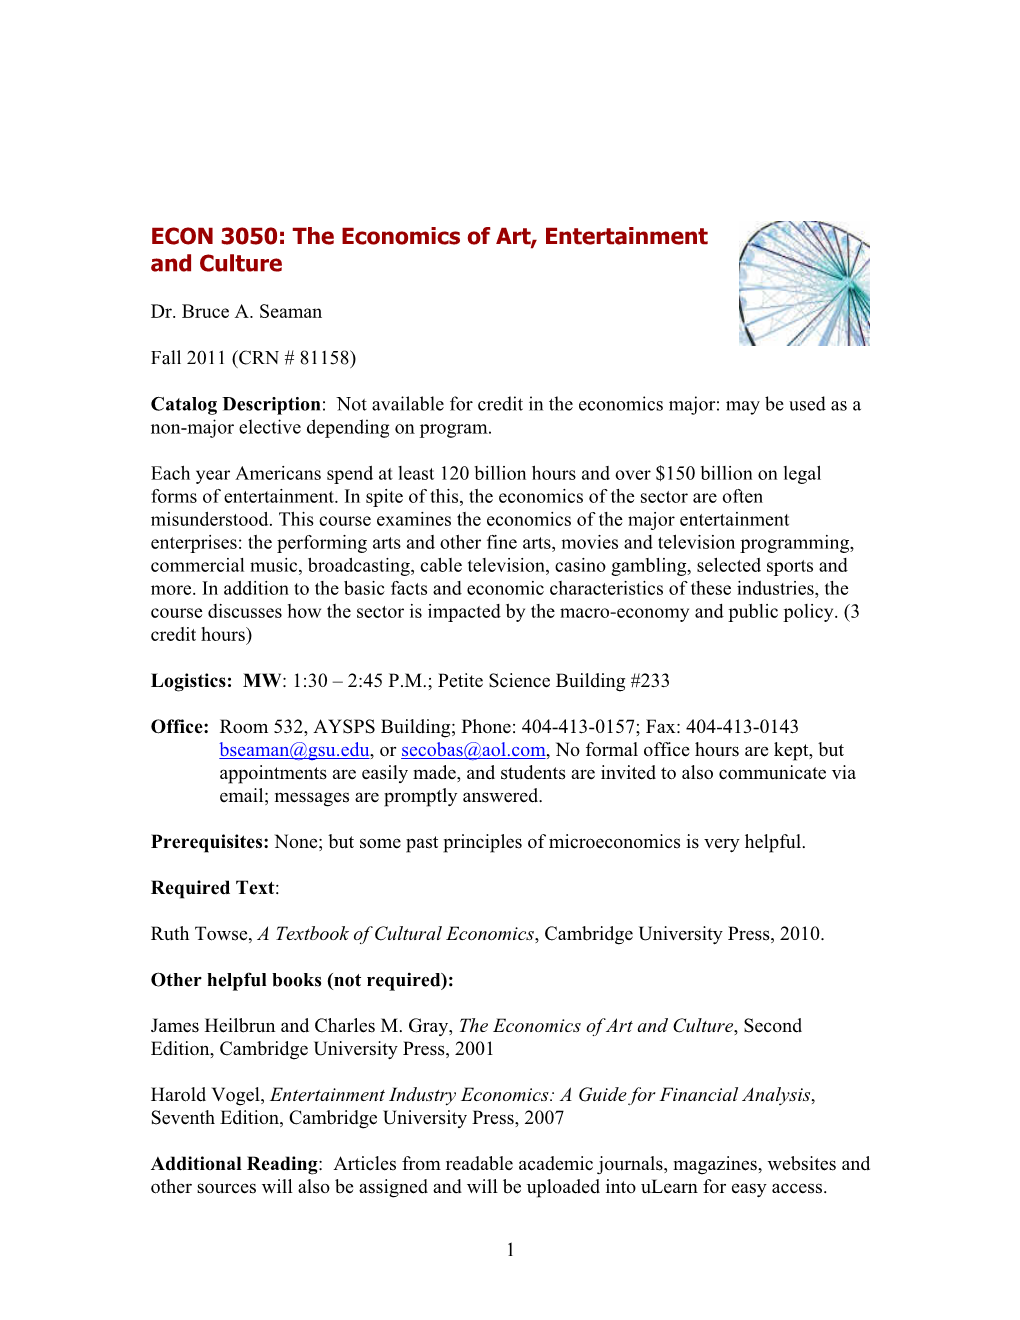 ECON 3050: the Economics of Art, Entertainment and Culture